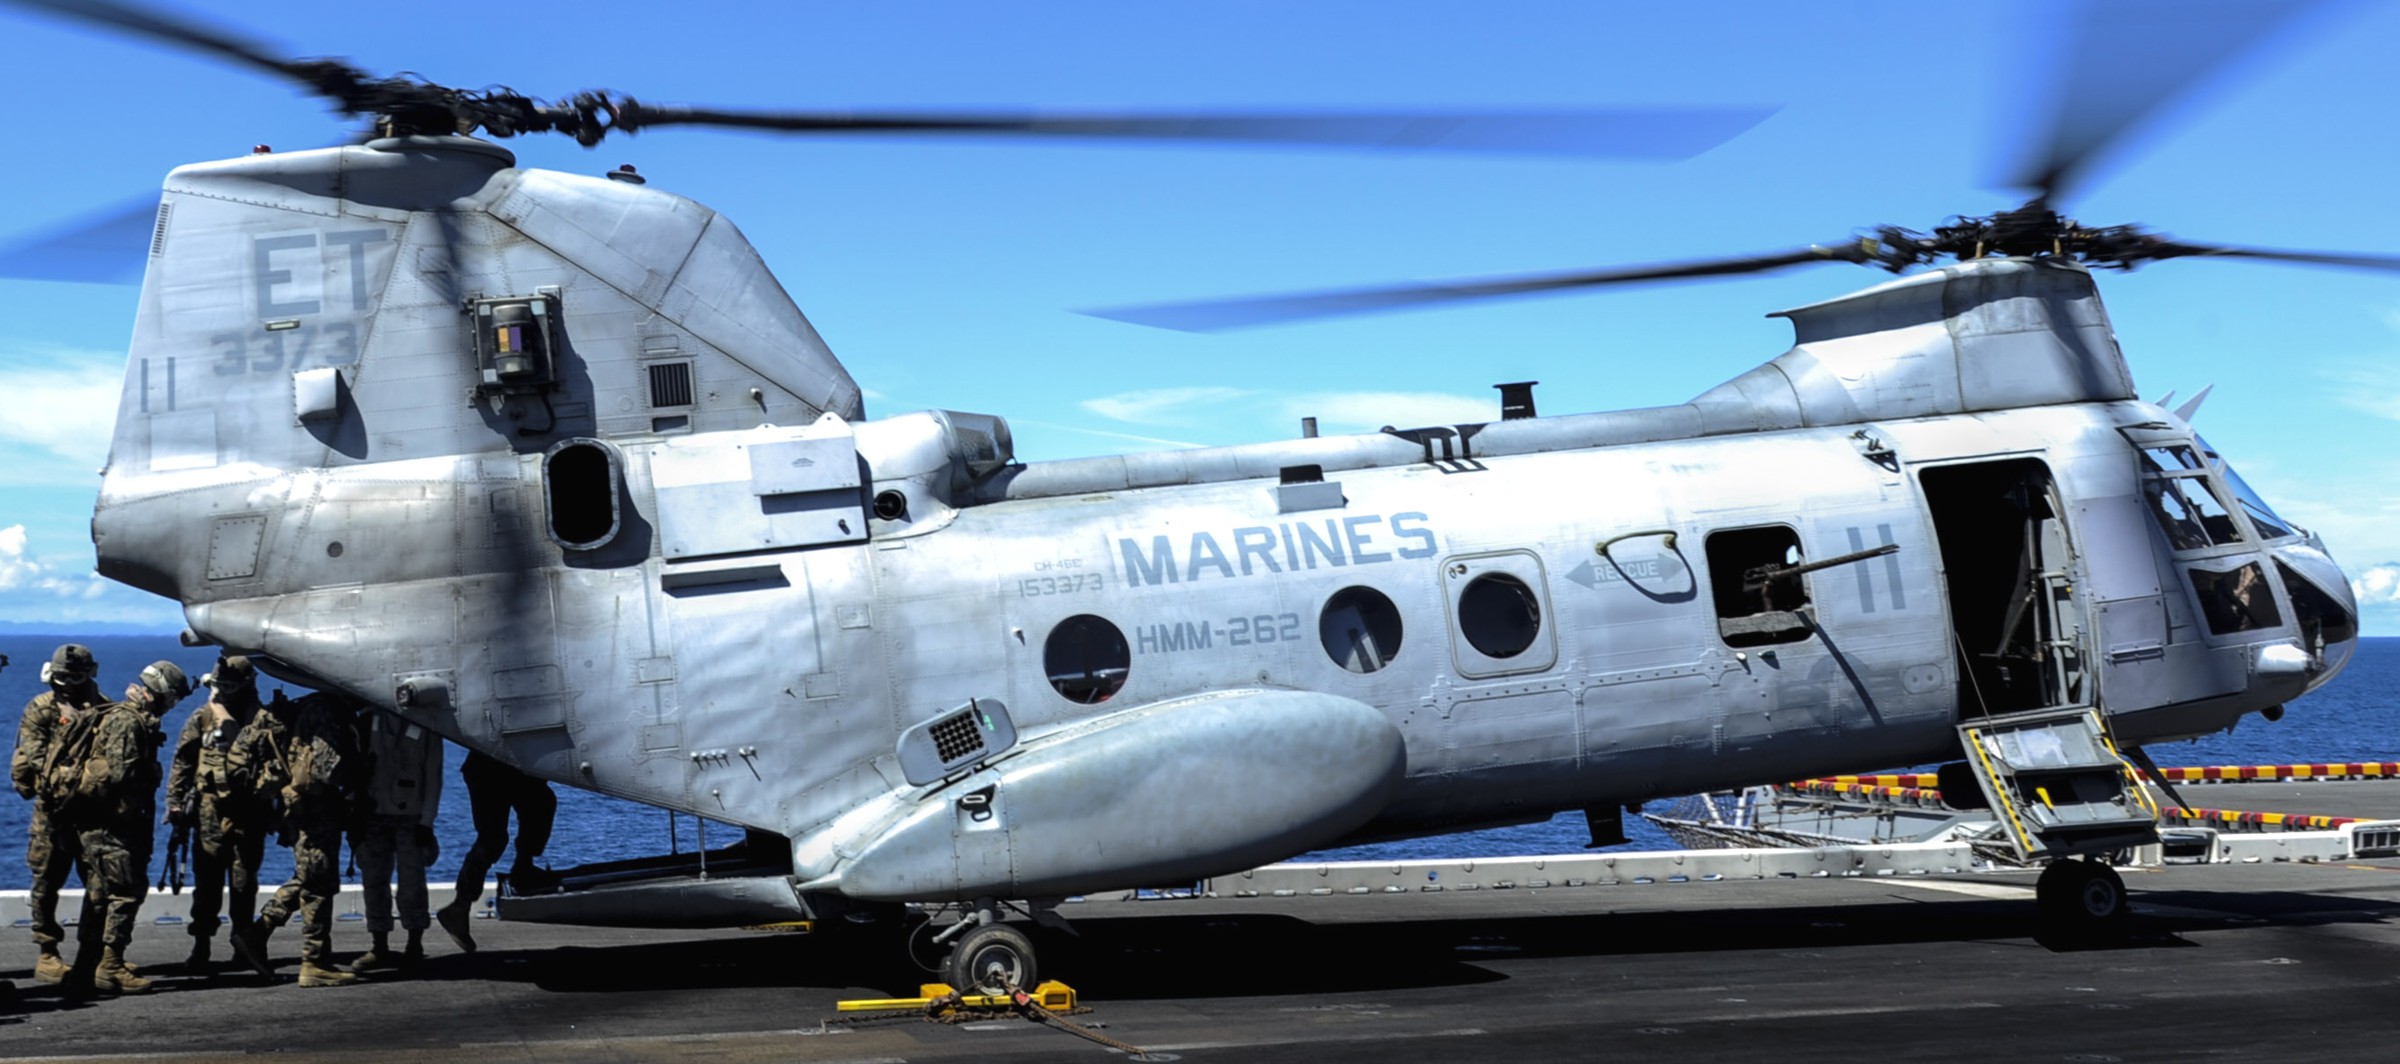 hmm-262 flying tigers ch-46e sea knight marine medium helicopter squadron lhd-6 uss bonhomme richard 102